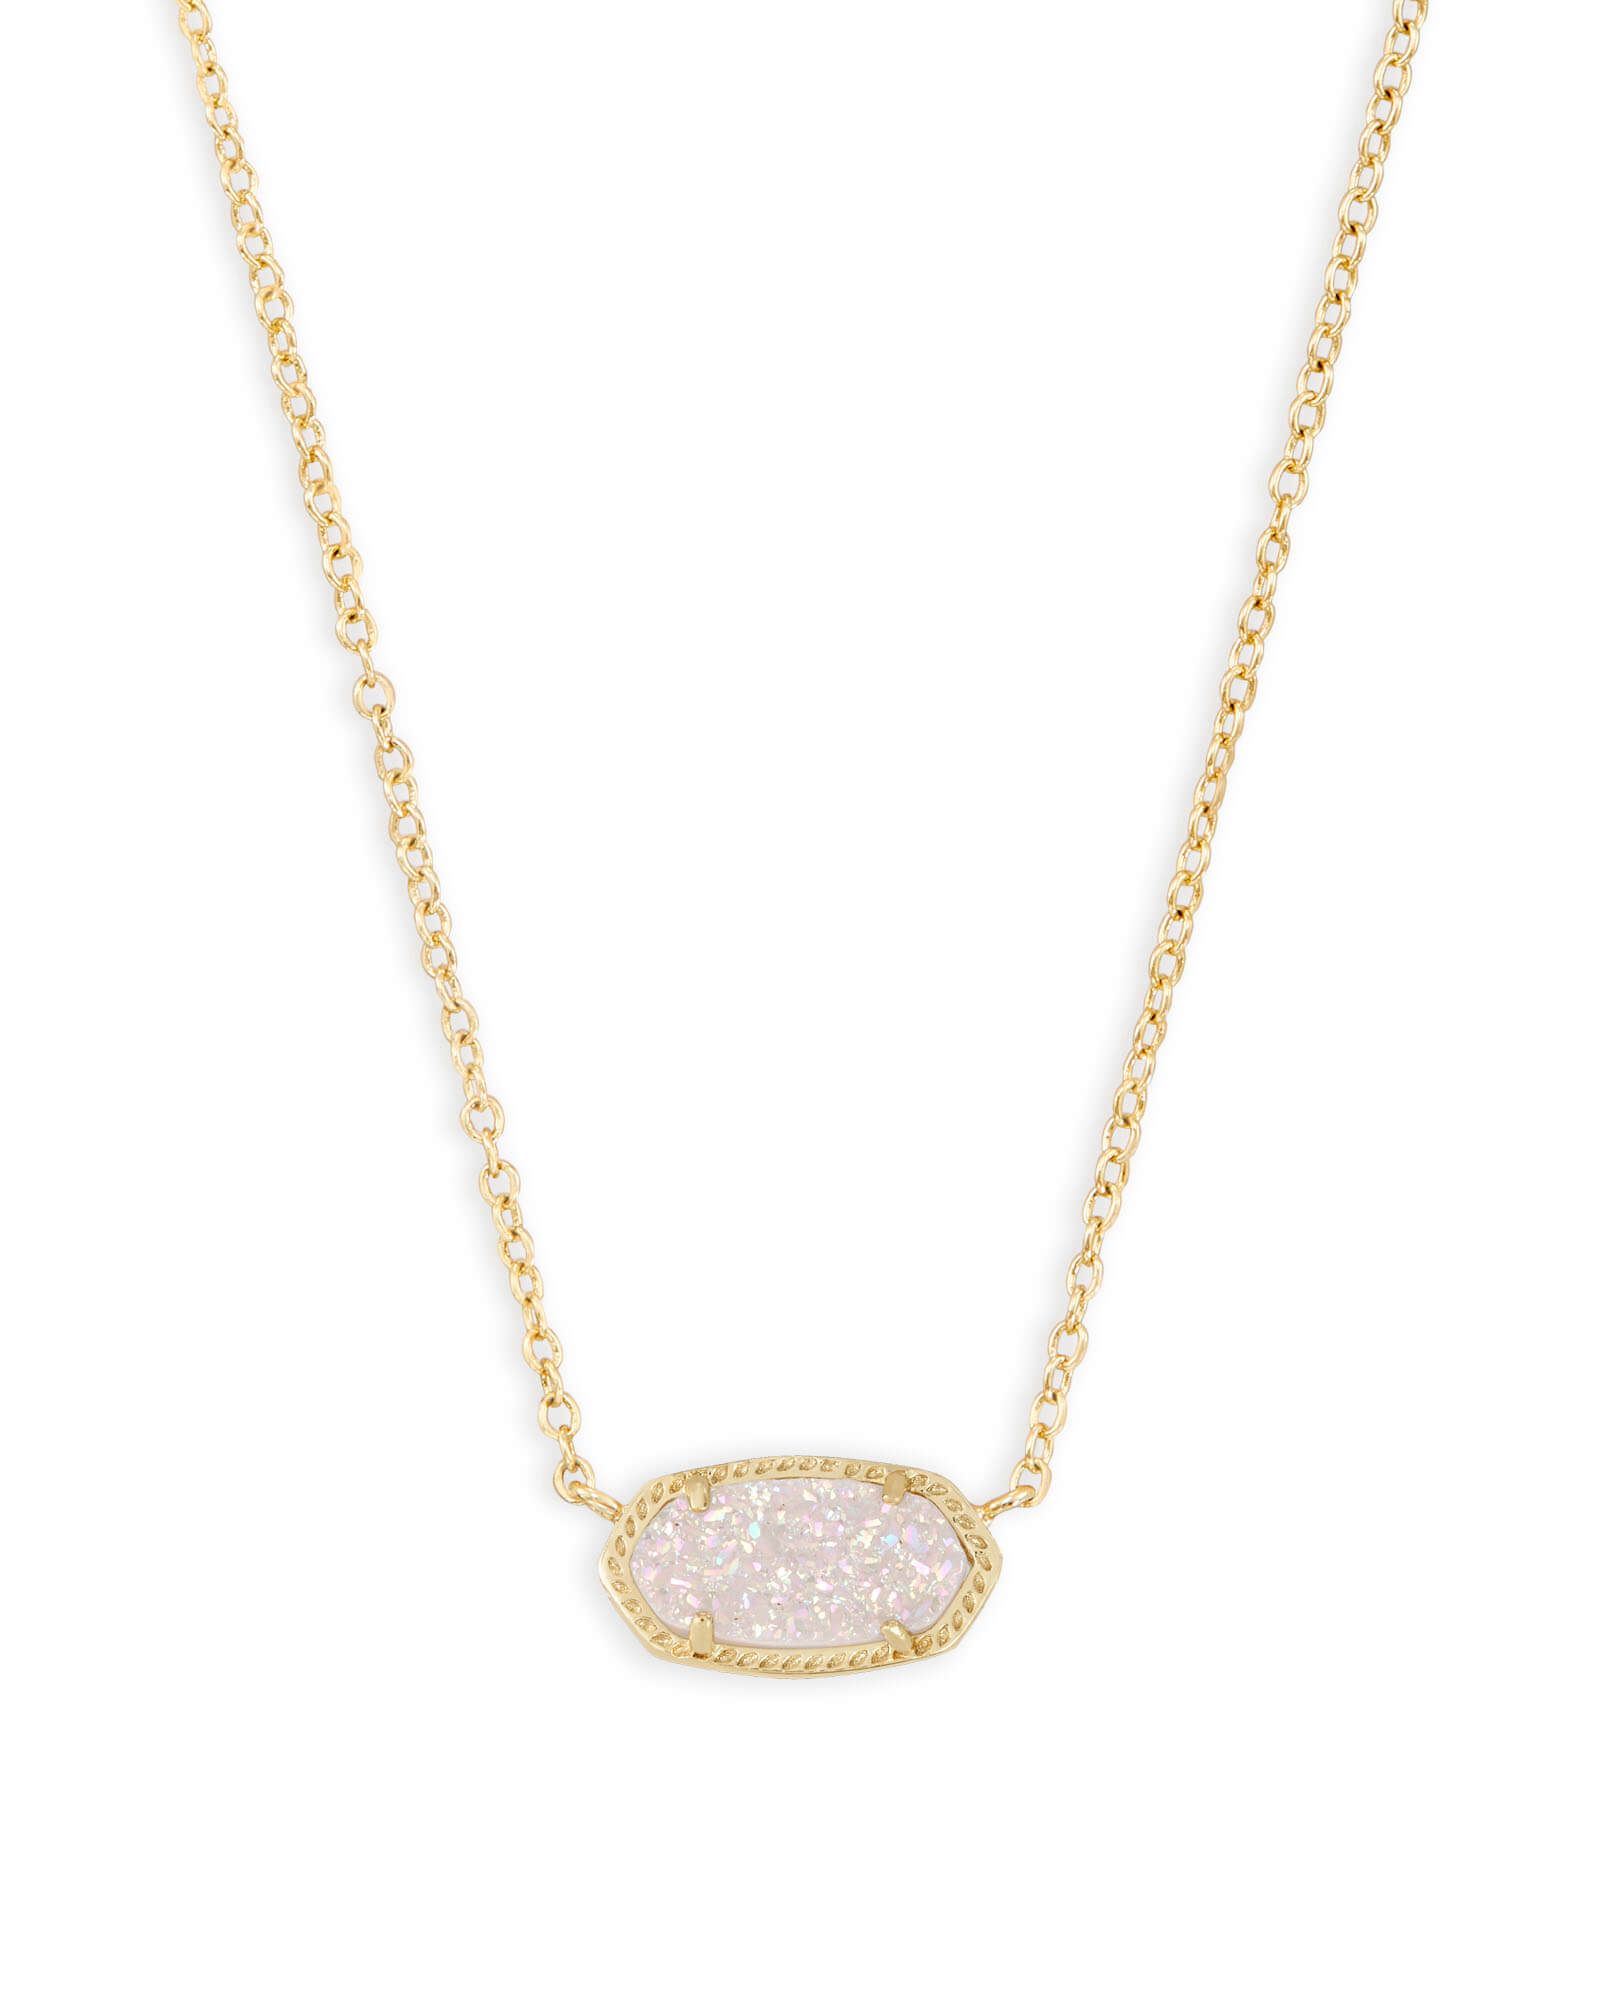 Elisa Gold Pendant Necklace in Drusy | Kendra Scott | Kendra Scott